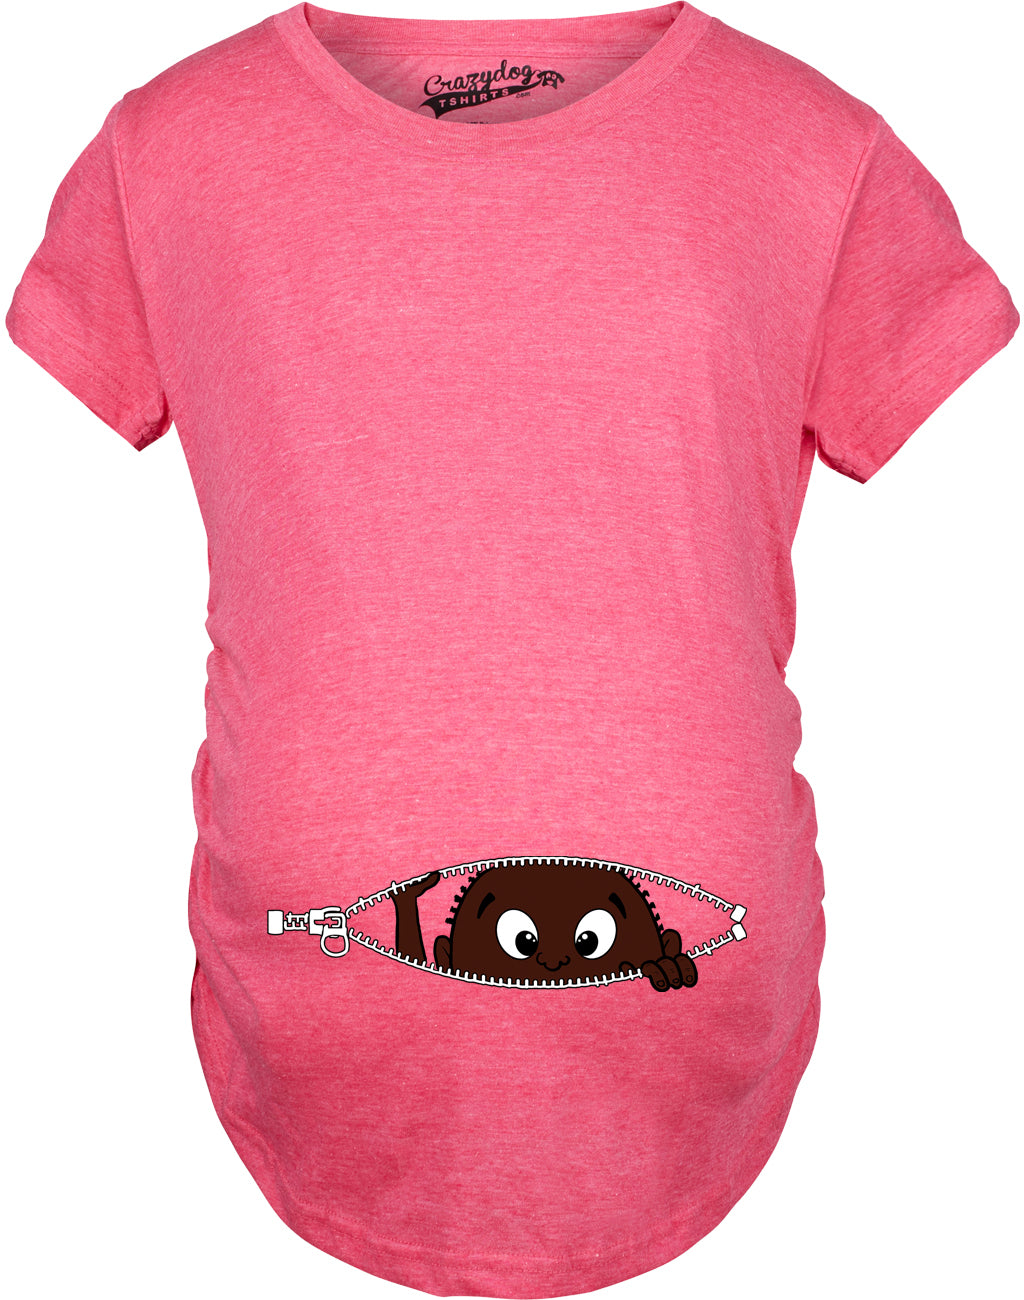 Funny Pink African American Peeking Baby Maternity T Shirt Nerdy Peeking Tee